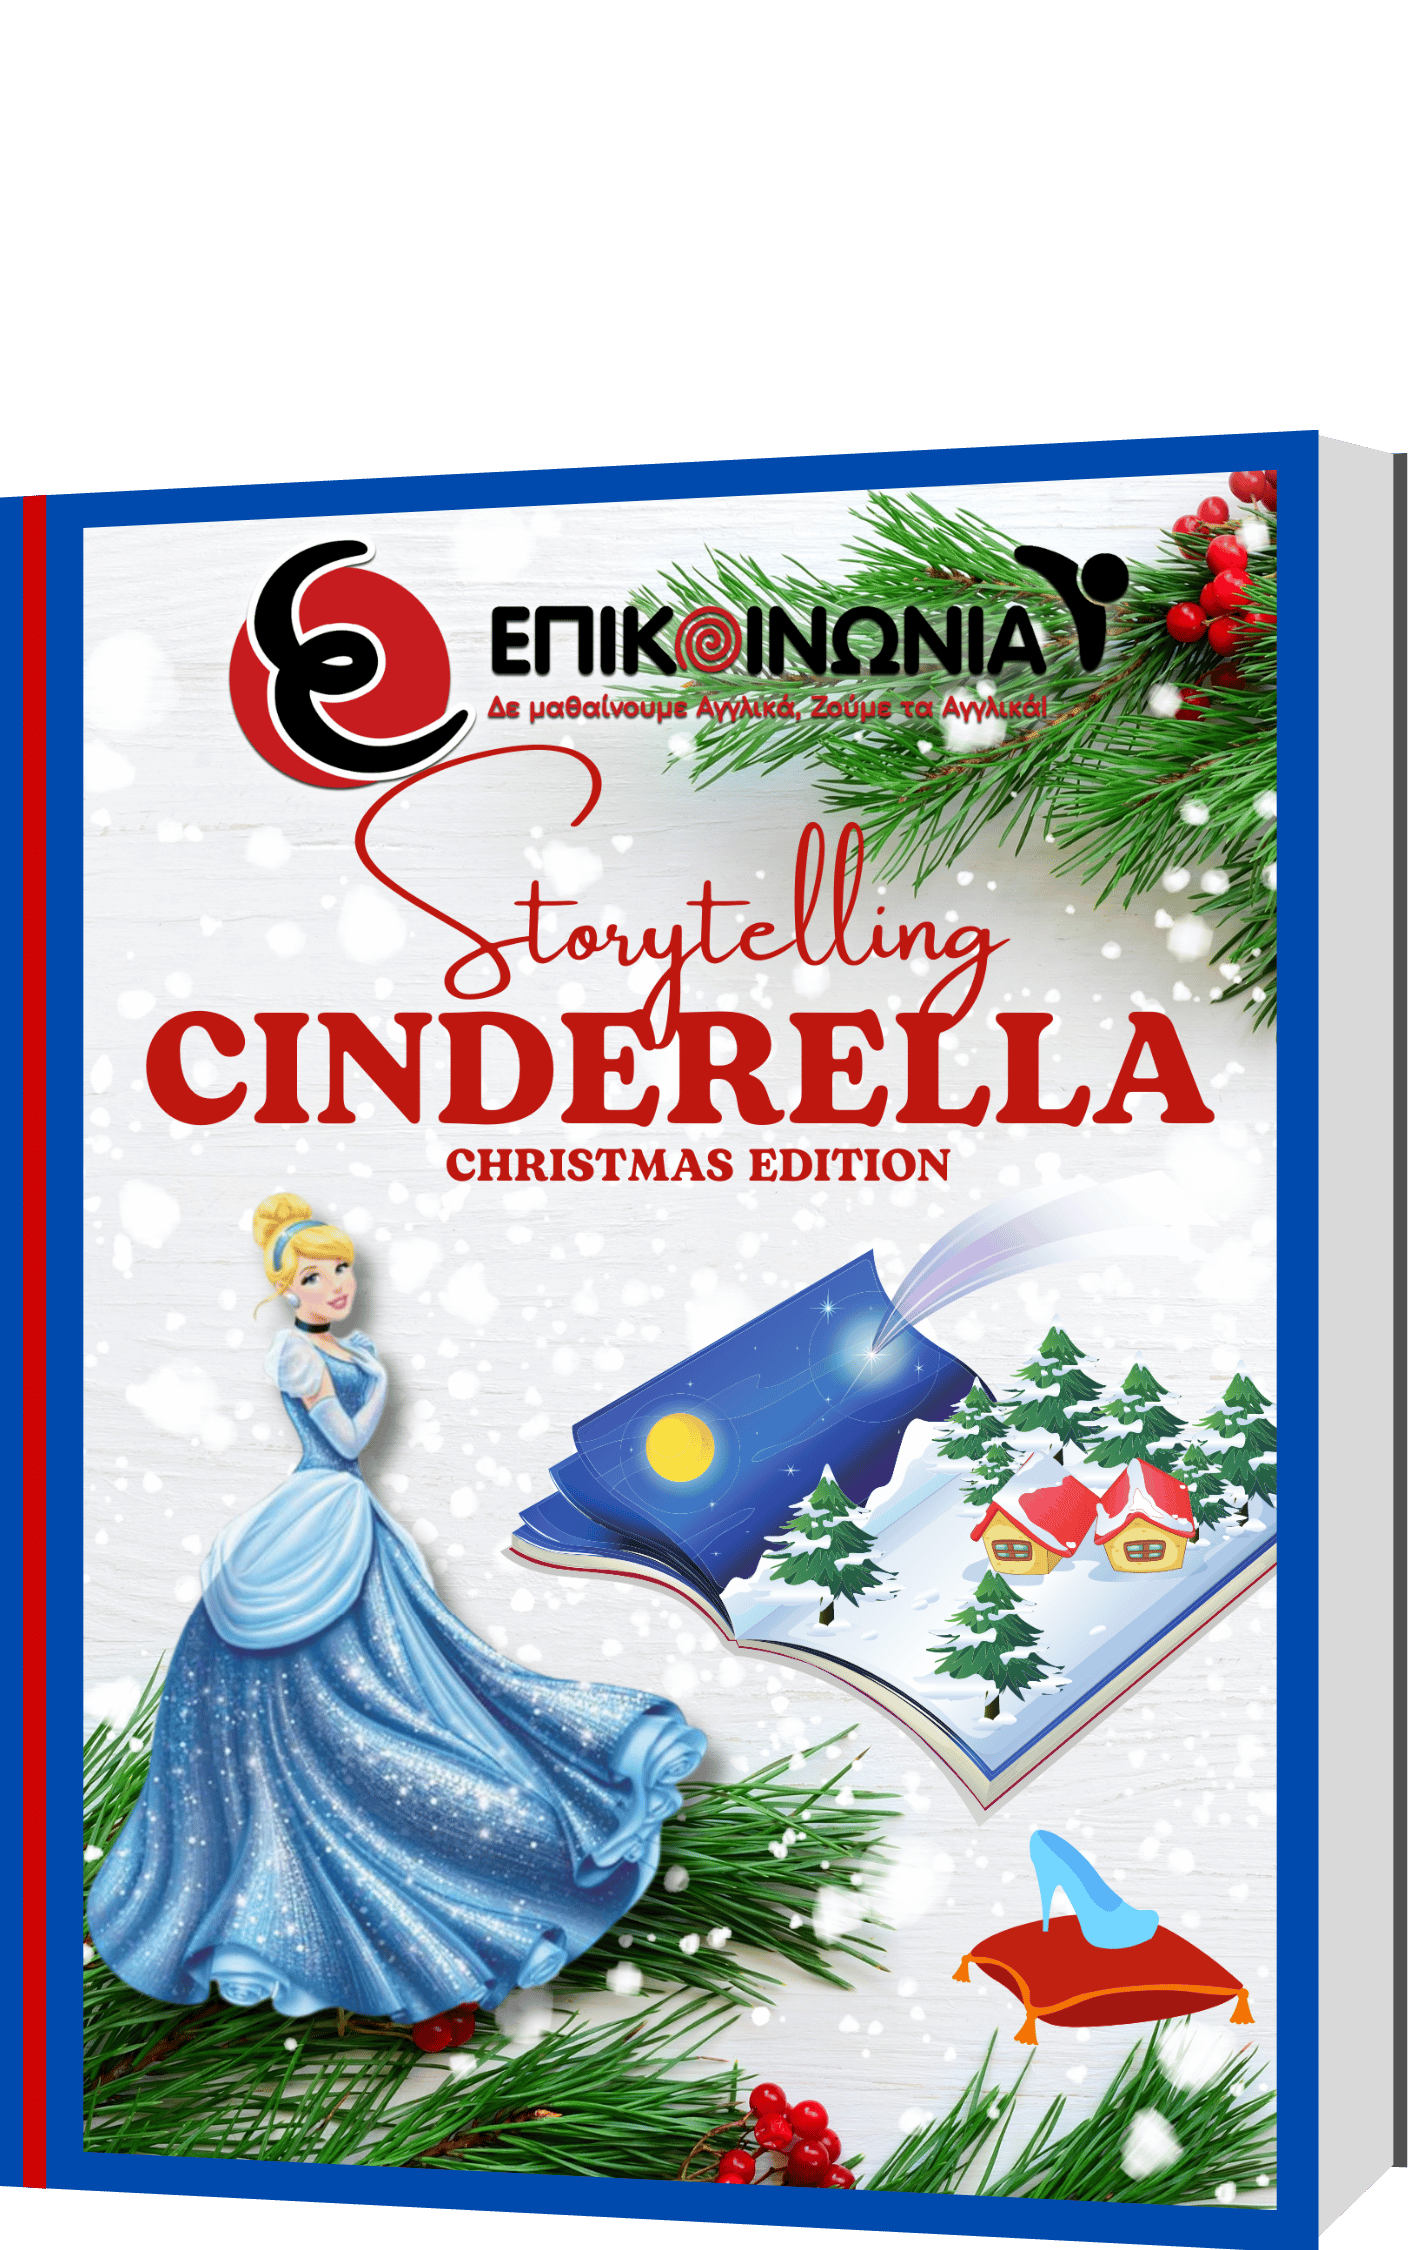 Storytelling ”Cinderella”